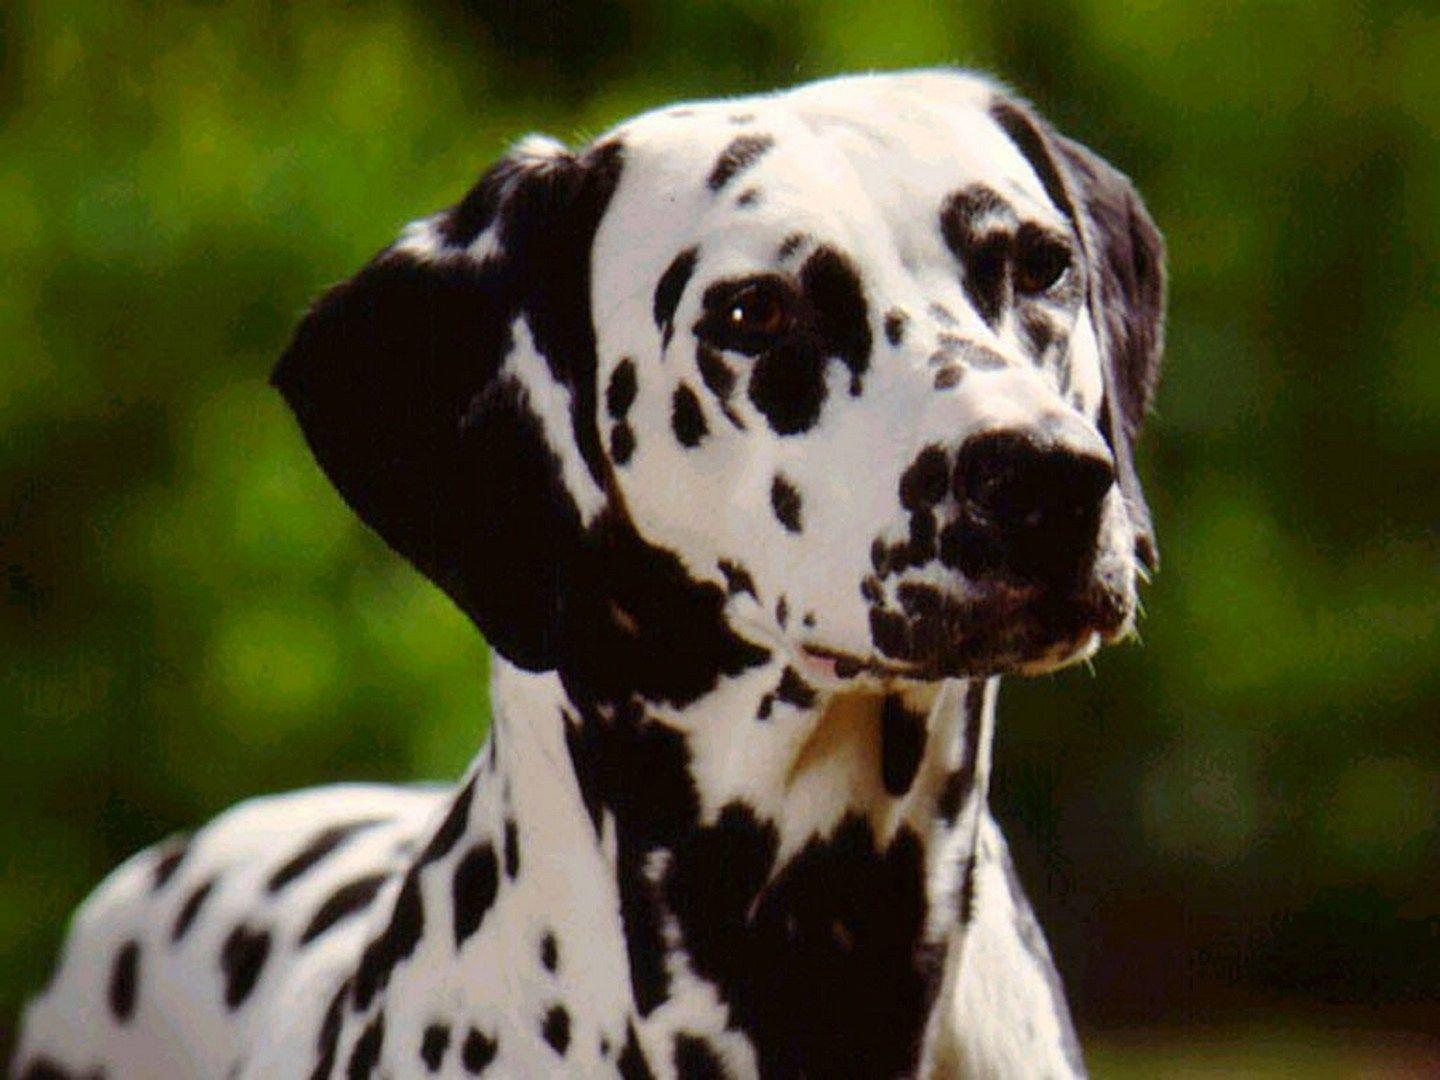 dalmation dog photo. Big Dalmatian Dog. Dog Wallpaper, Puppy